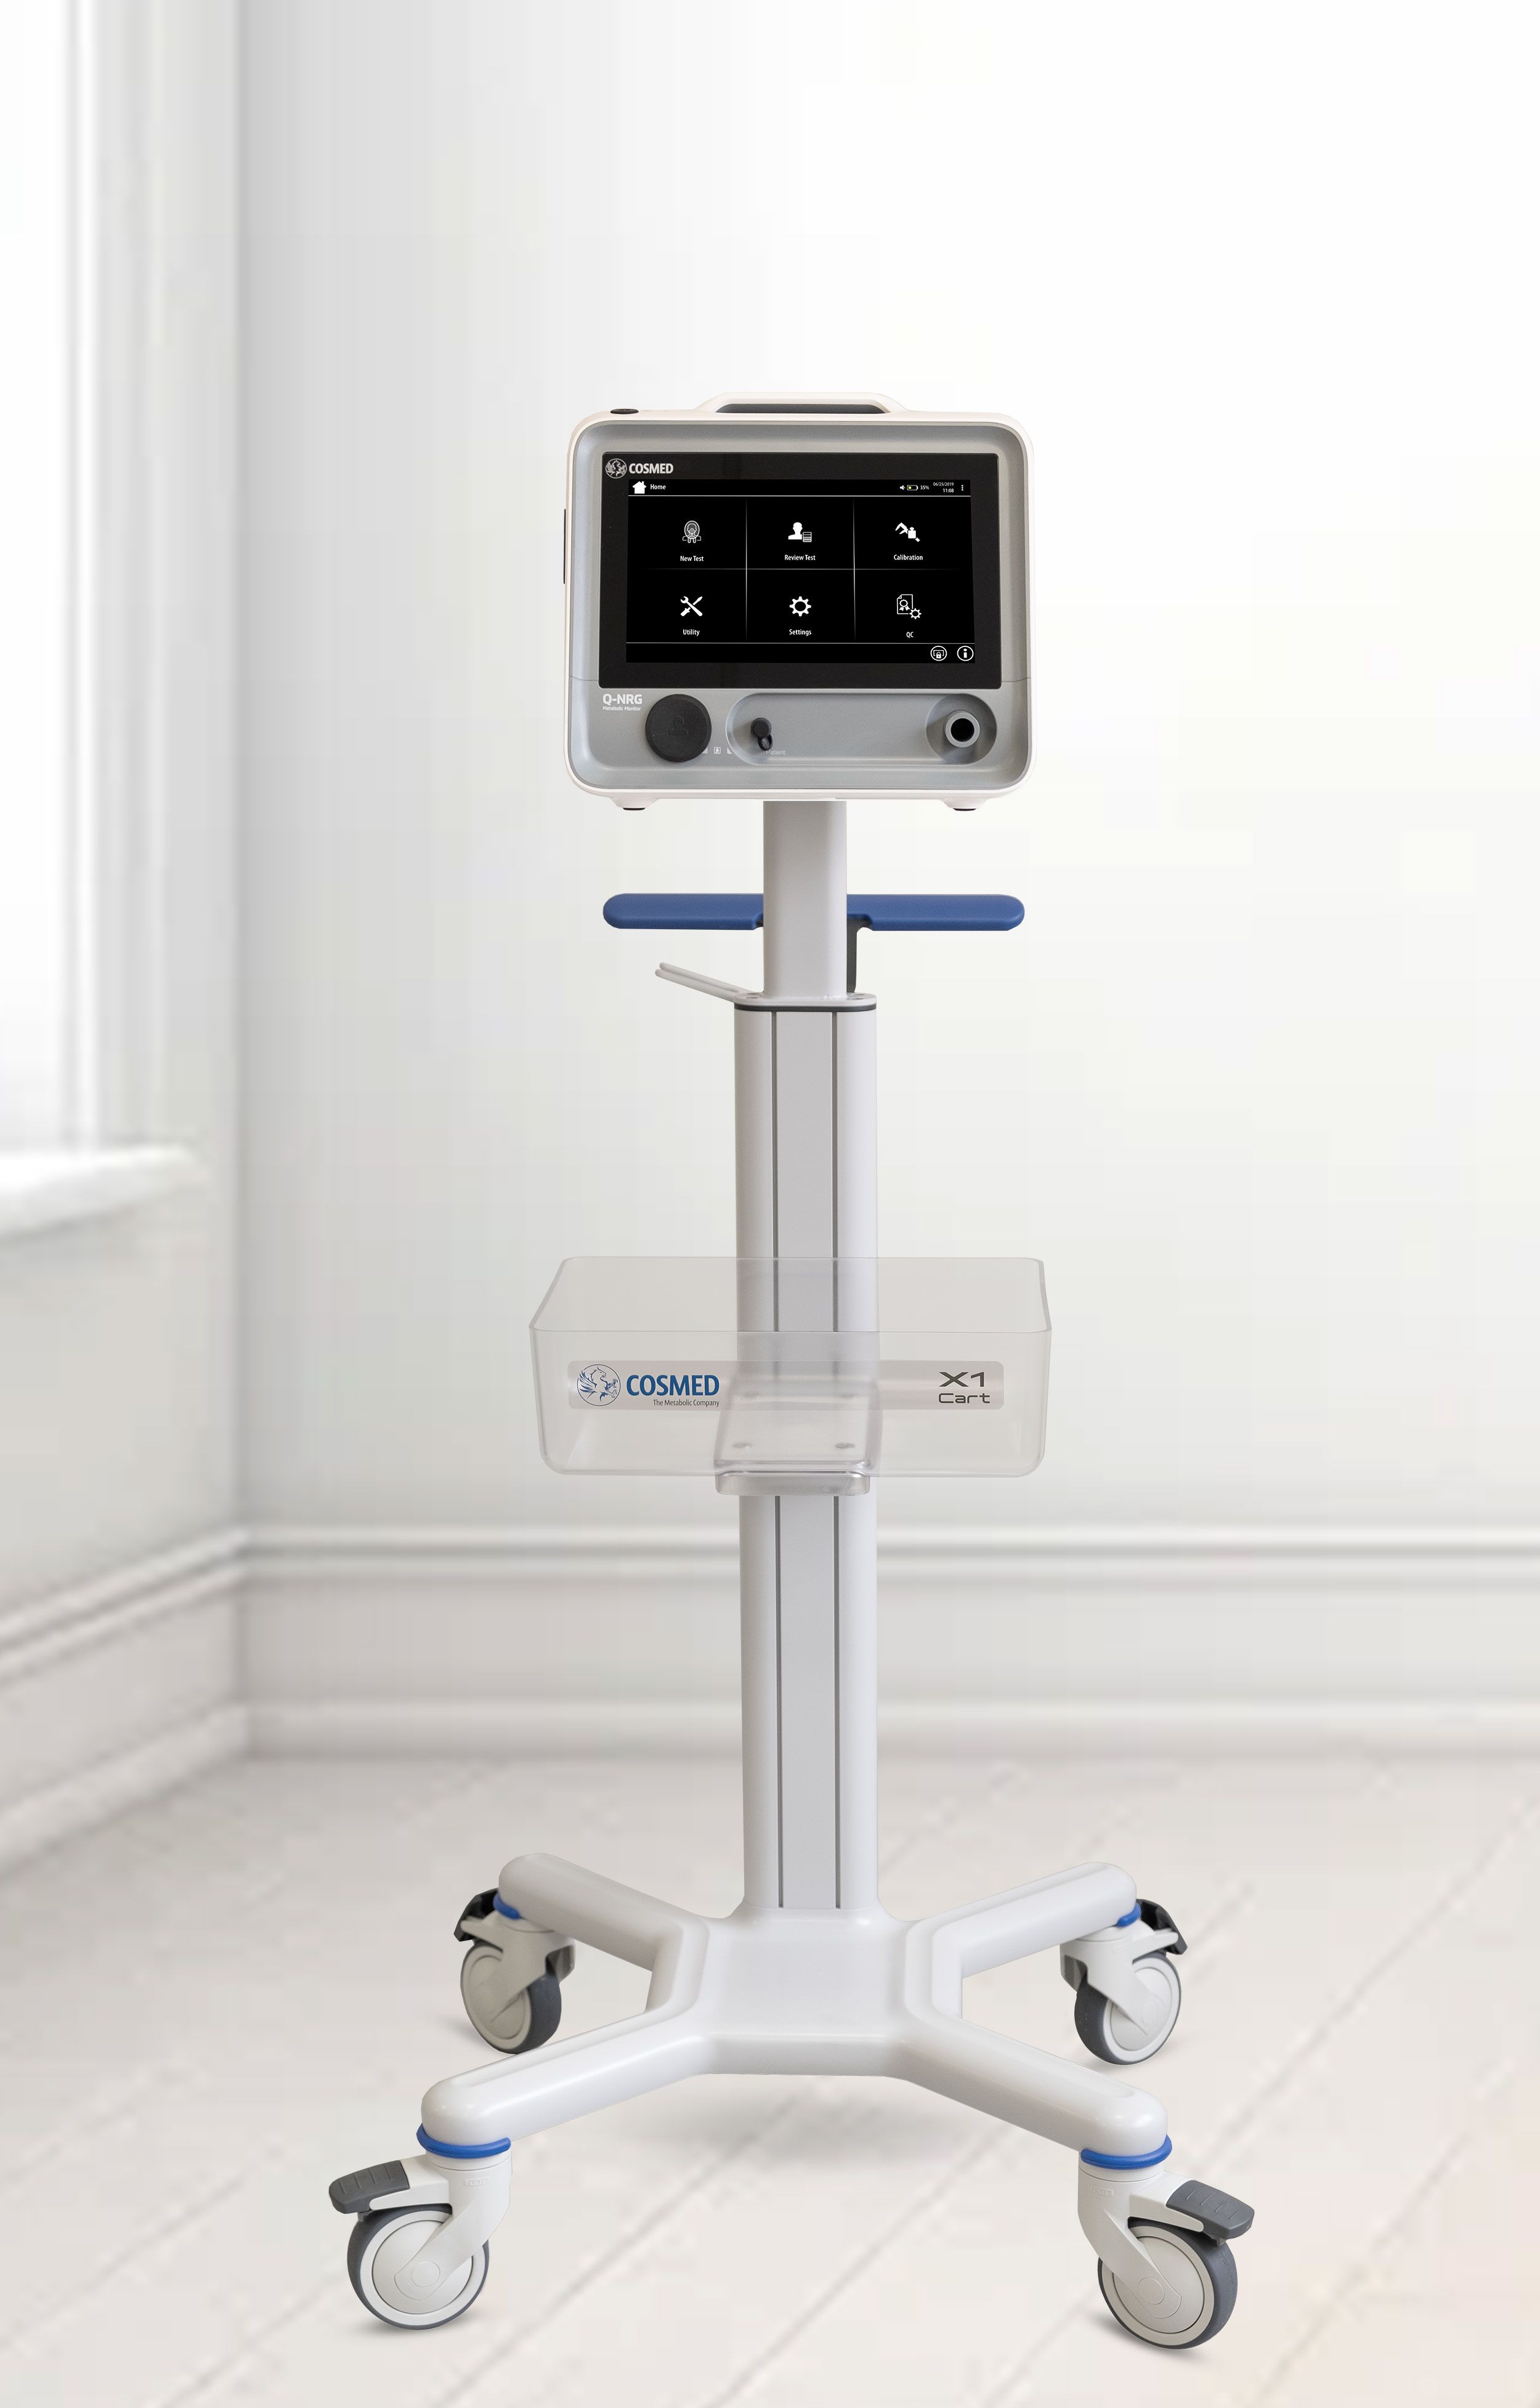 Q-NRG - Metabolic monitor on the cart